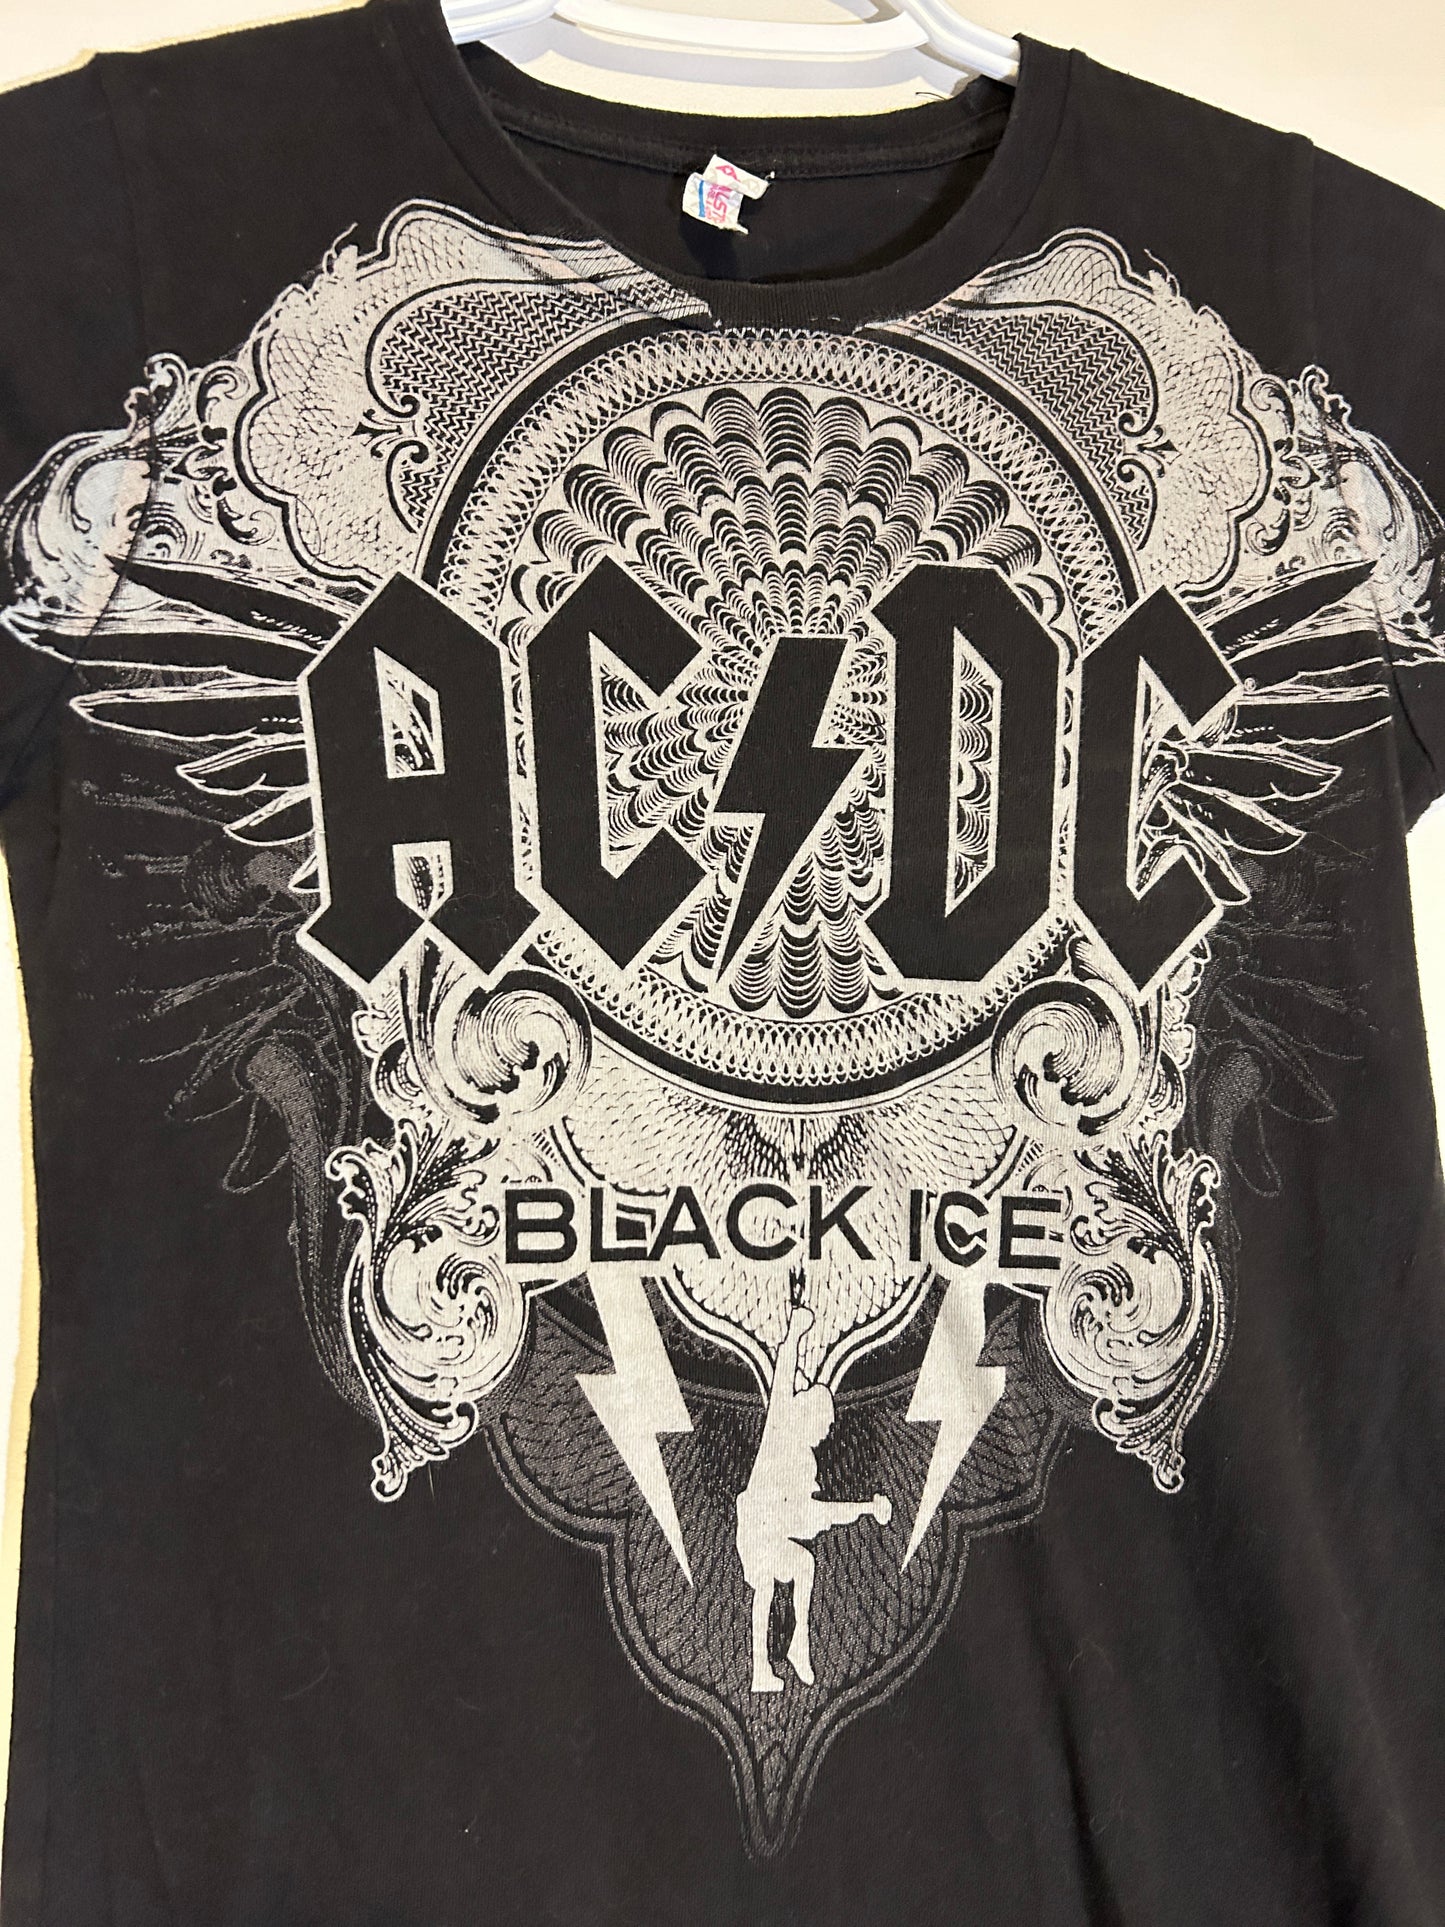 AC/DC Women’s Black Ice Concert Tee (S)